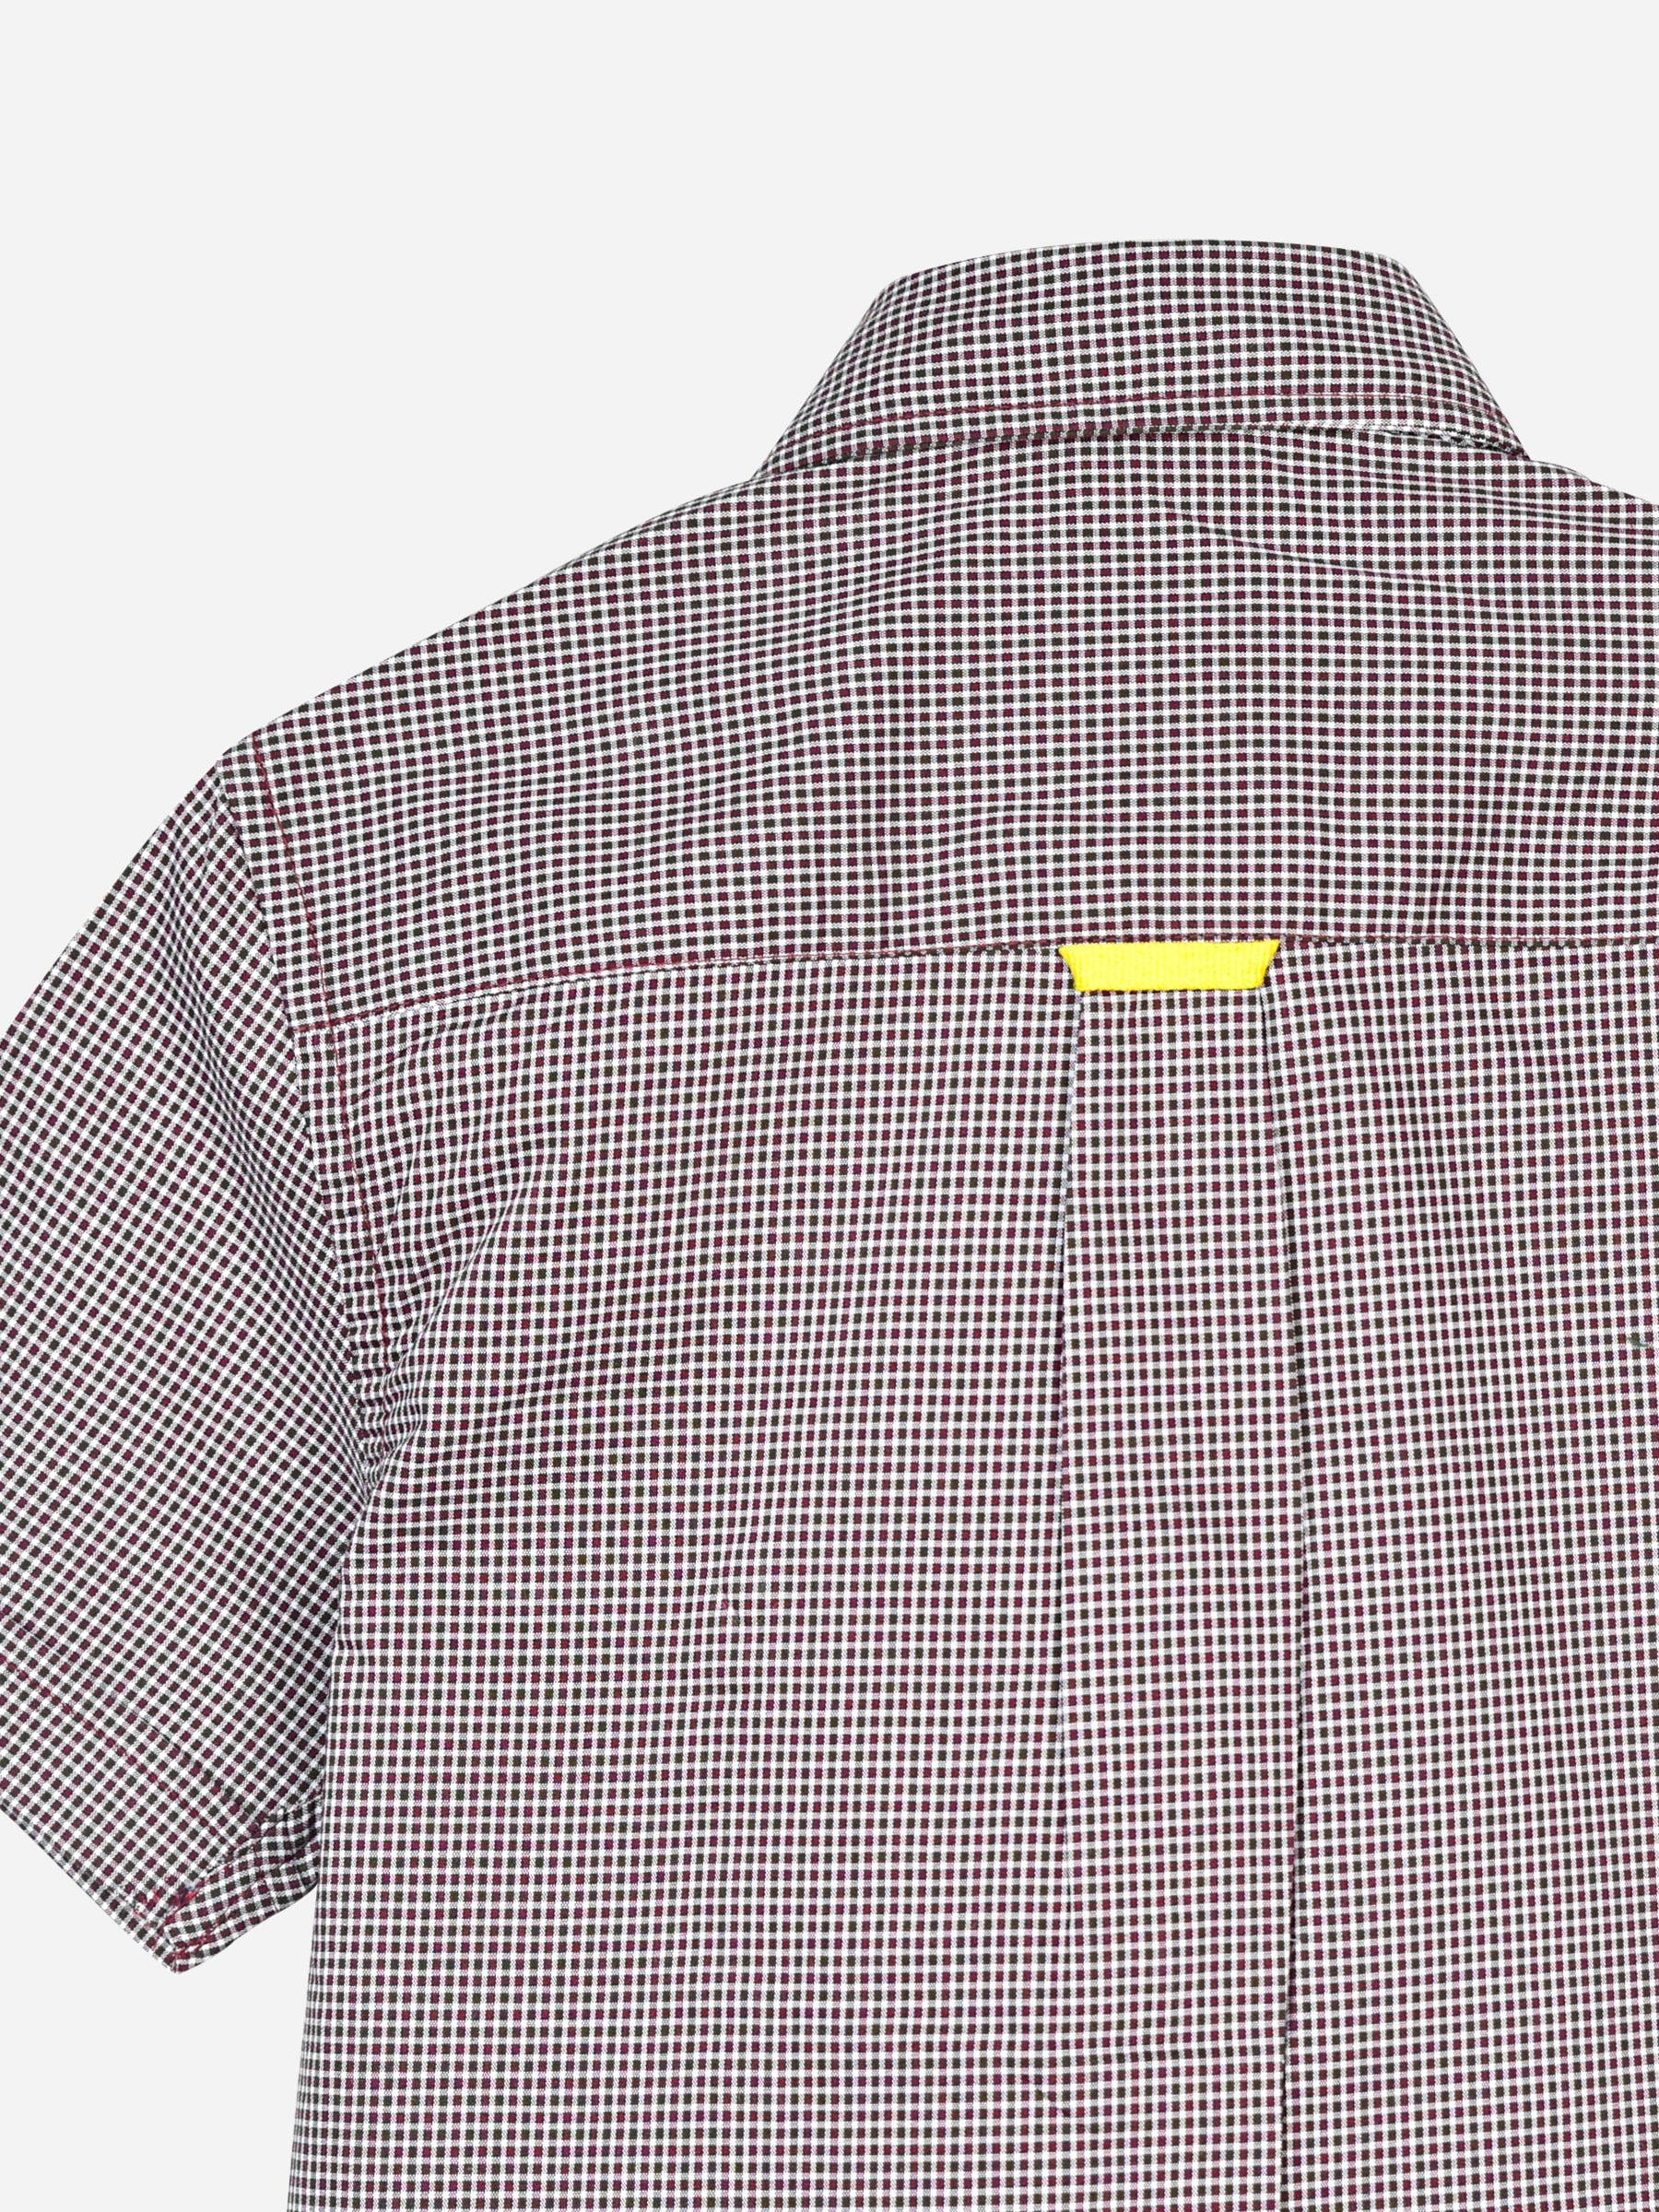 Maroon Micro Checkered Short Sleeve Shirt Brumano Pakistan